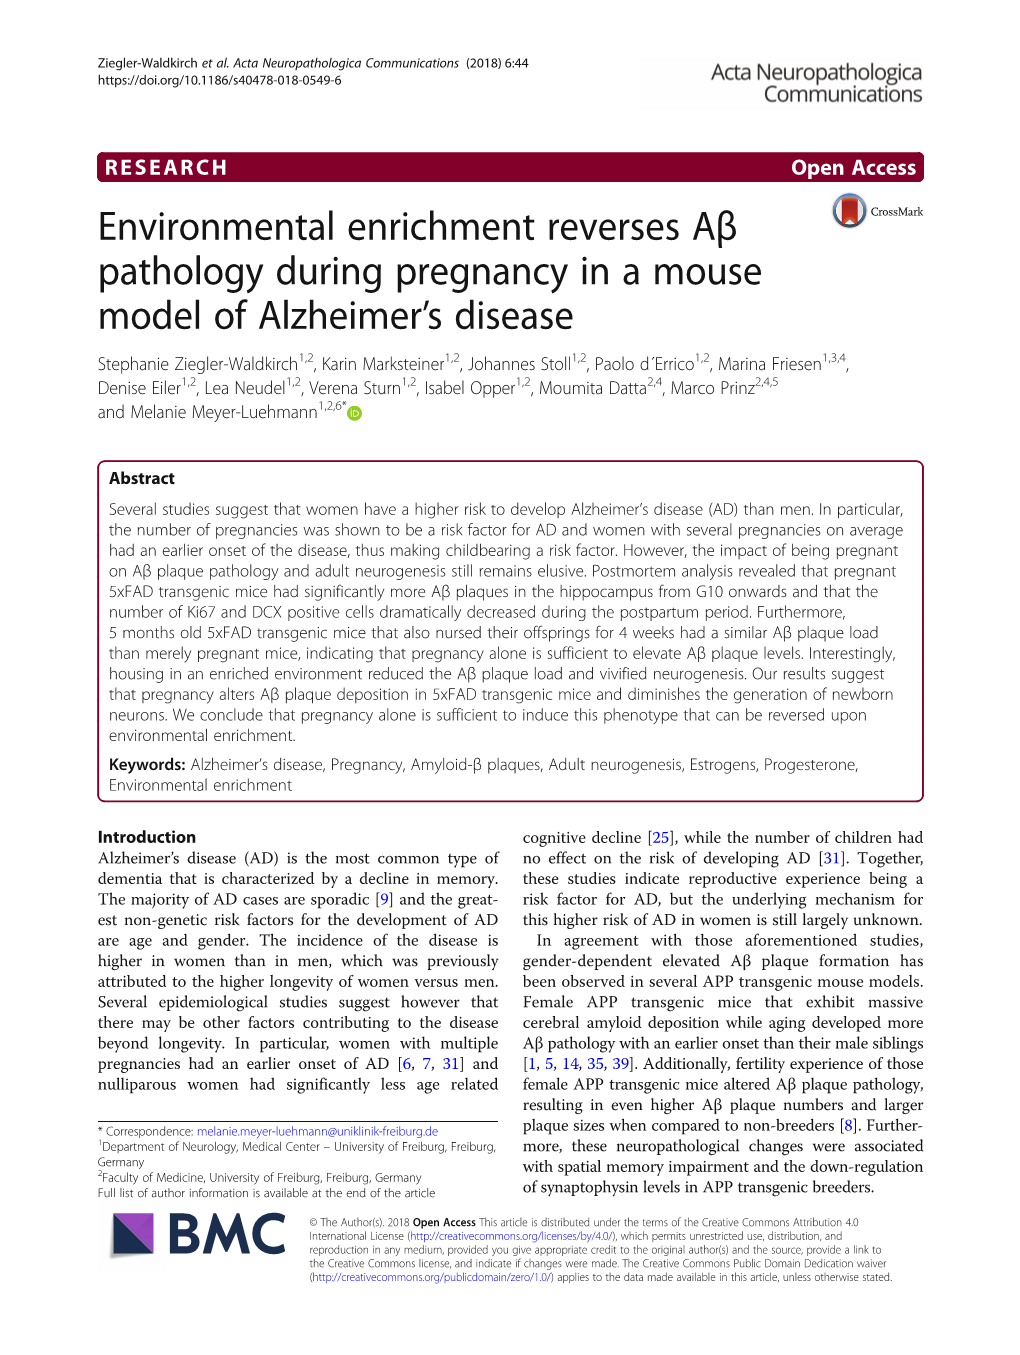 Environmental Enrichment Reverses Aβ Pathology During Pregnancy in A